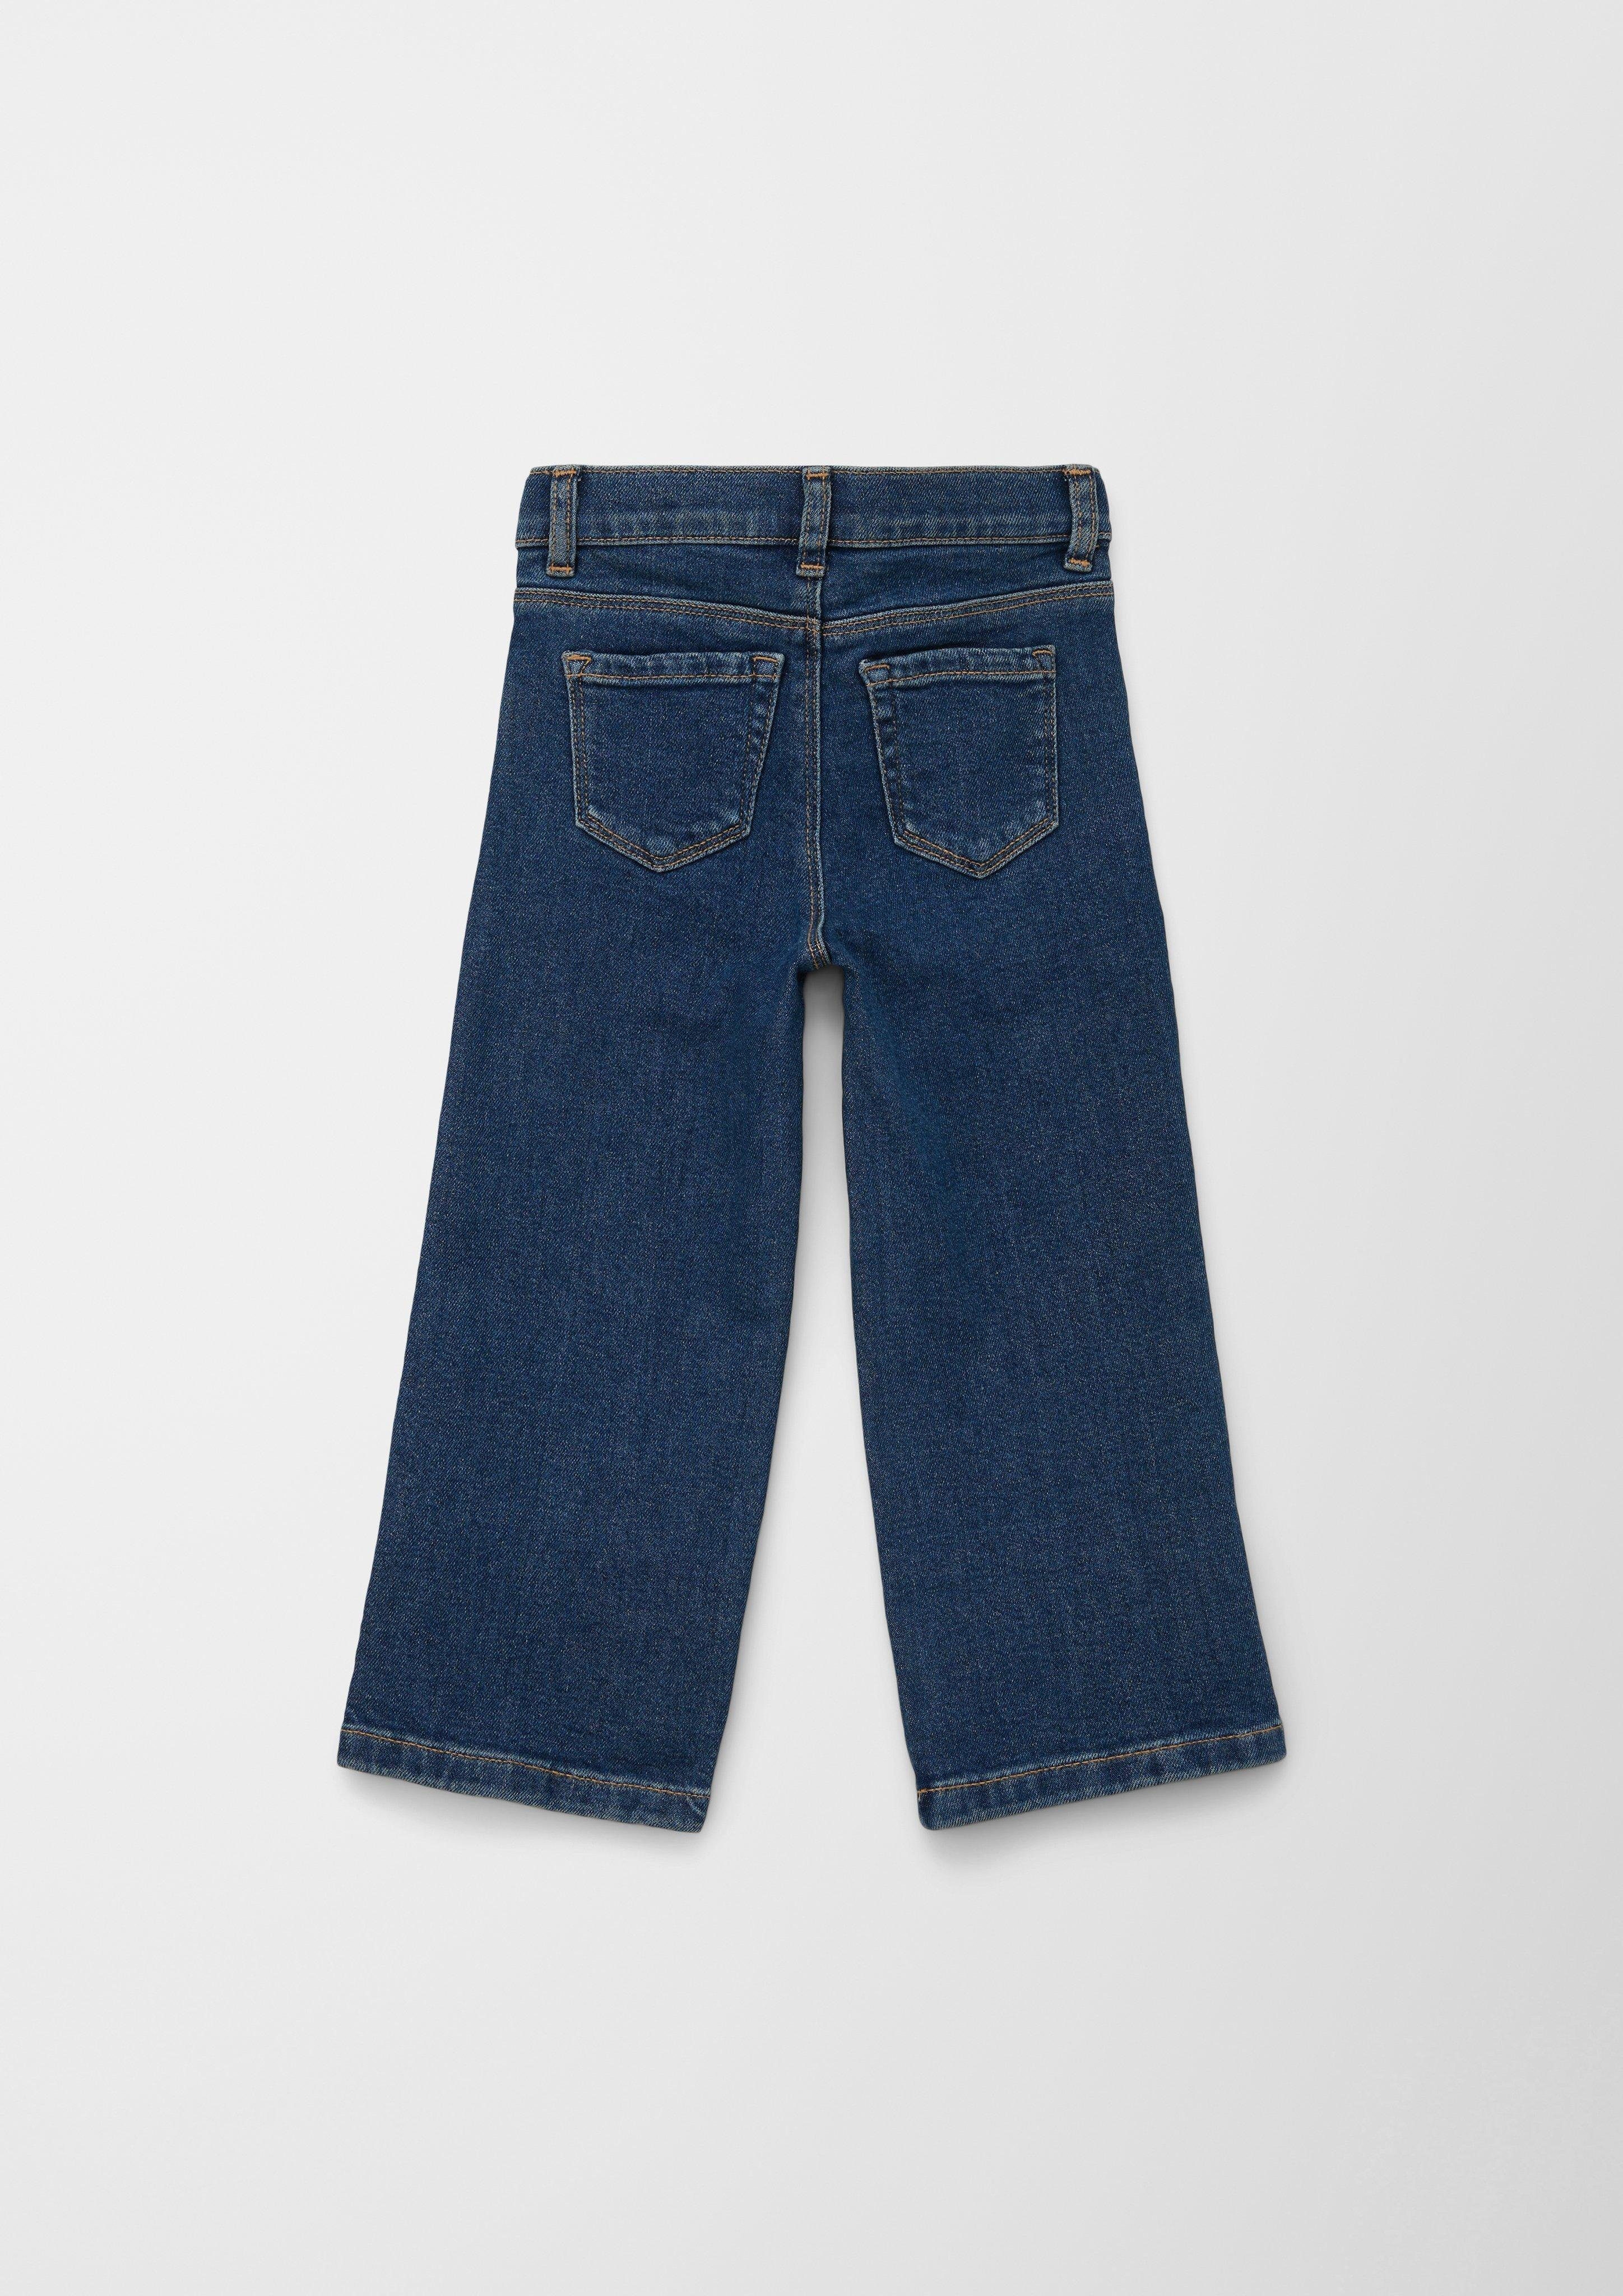 Fit / Leg Mid Rise / Jeans Wide / Weitenregulierung Waschung, Stoffhose / Kontrastnähte s.Oliver Regular